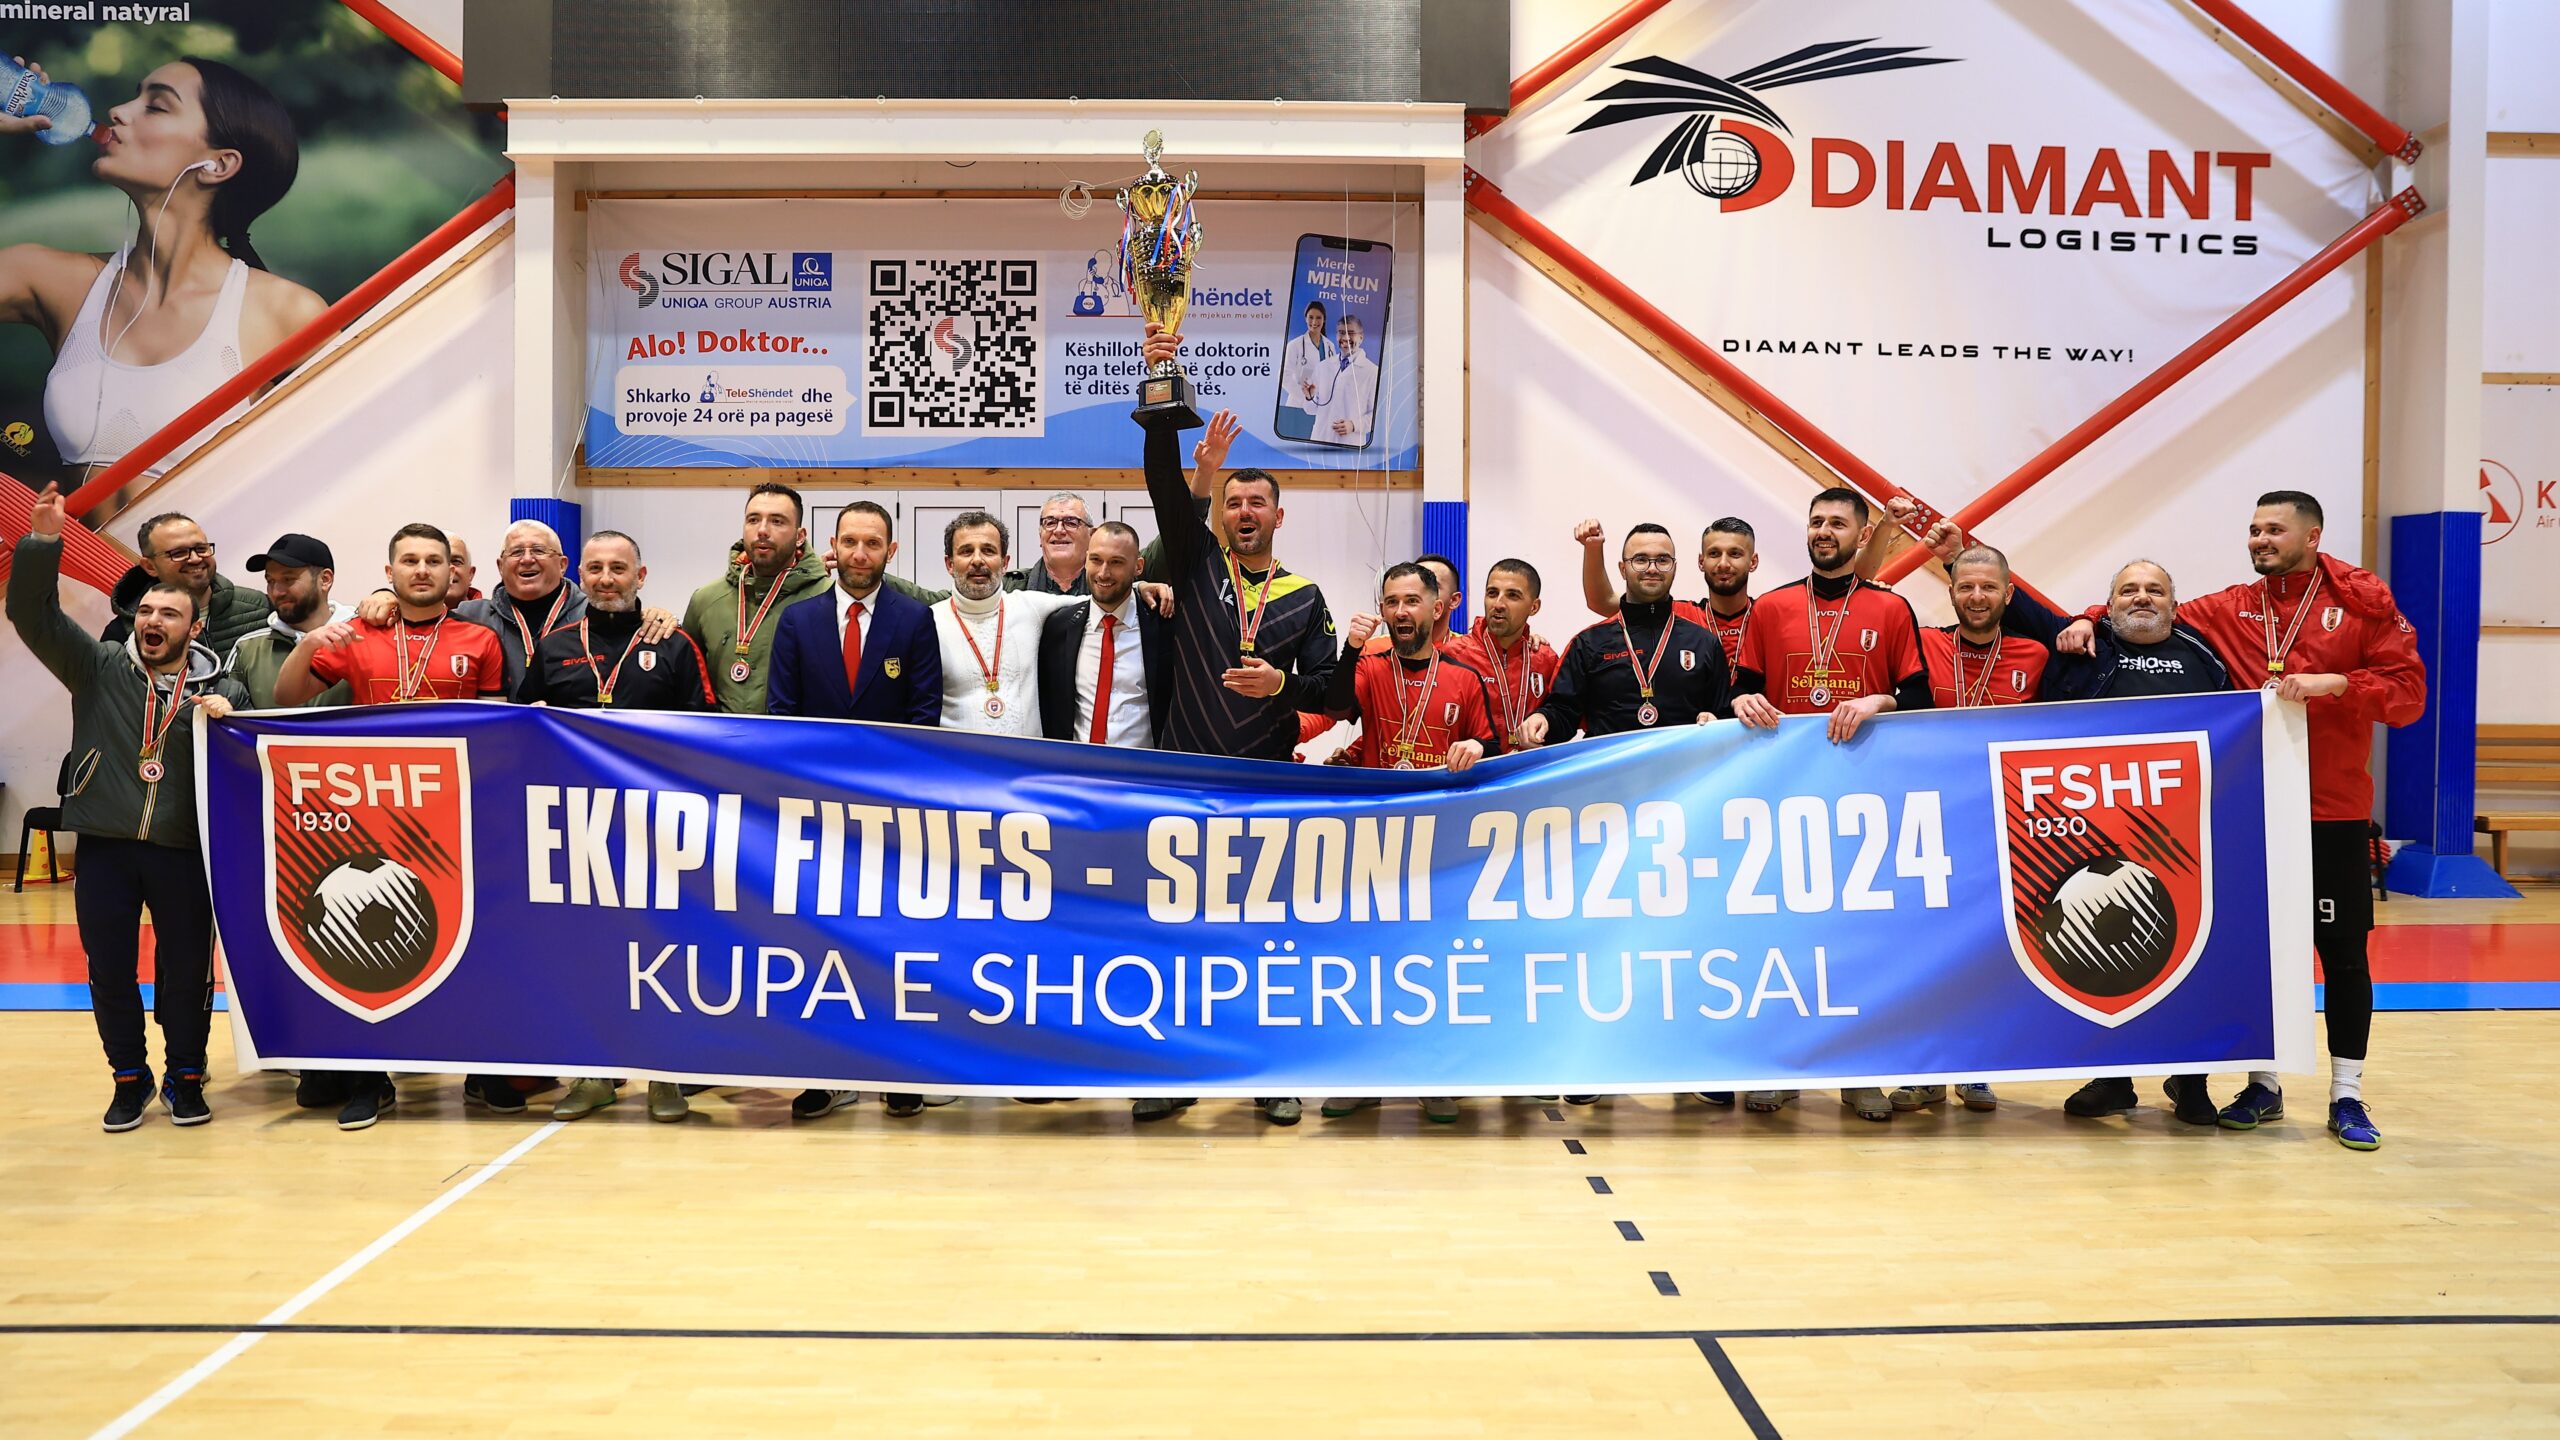 kupa e shqiperise ne futsall flamurtari mund partizanin ne finale dhe siguron trofeun